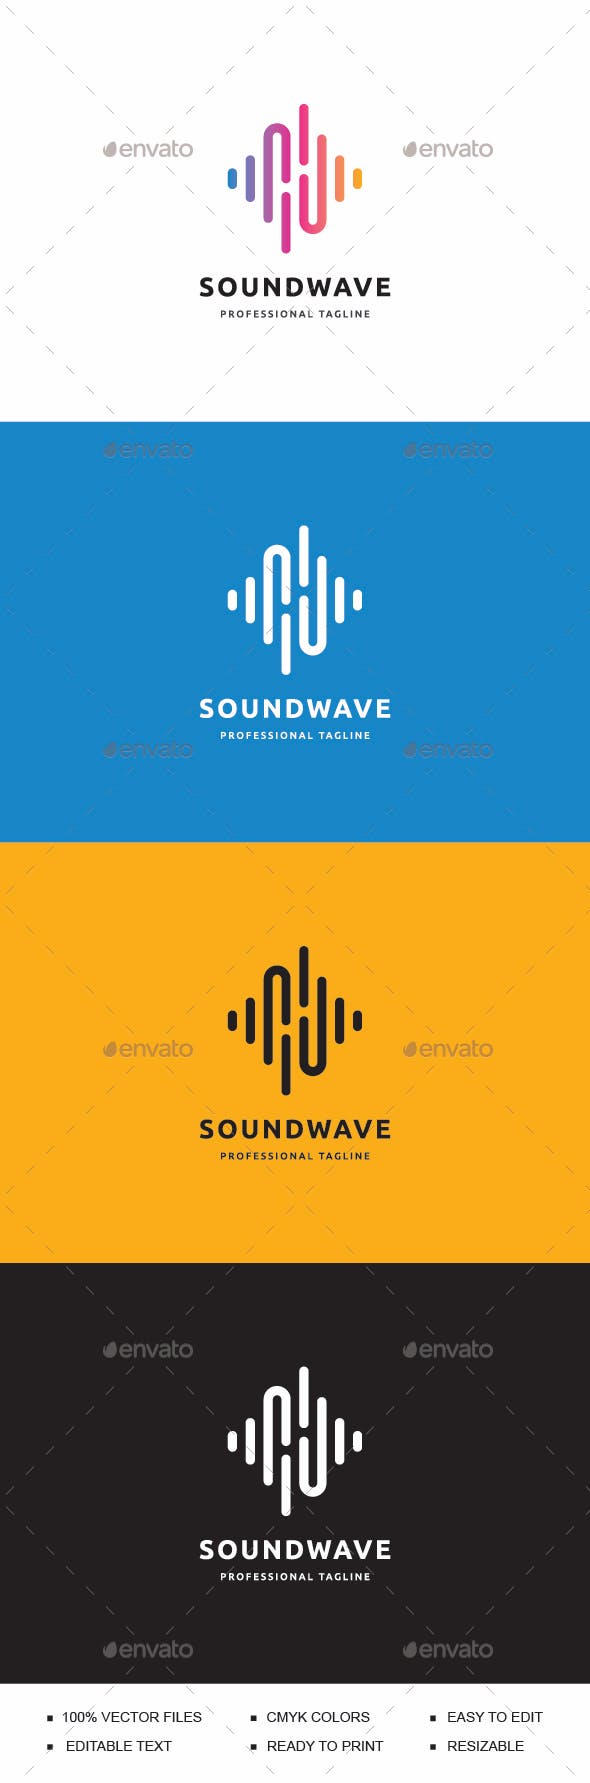 Sound Wave Logo - Sound Wave Logo by Shact | GraphicRiver